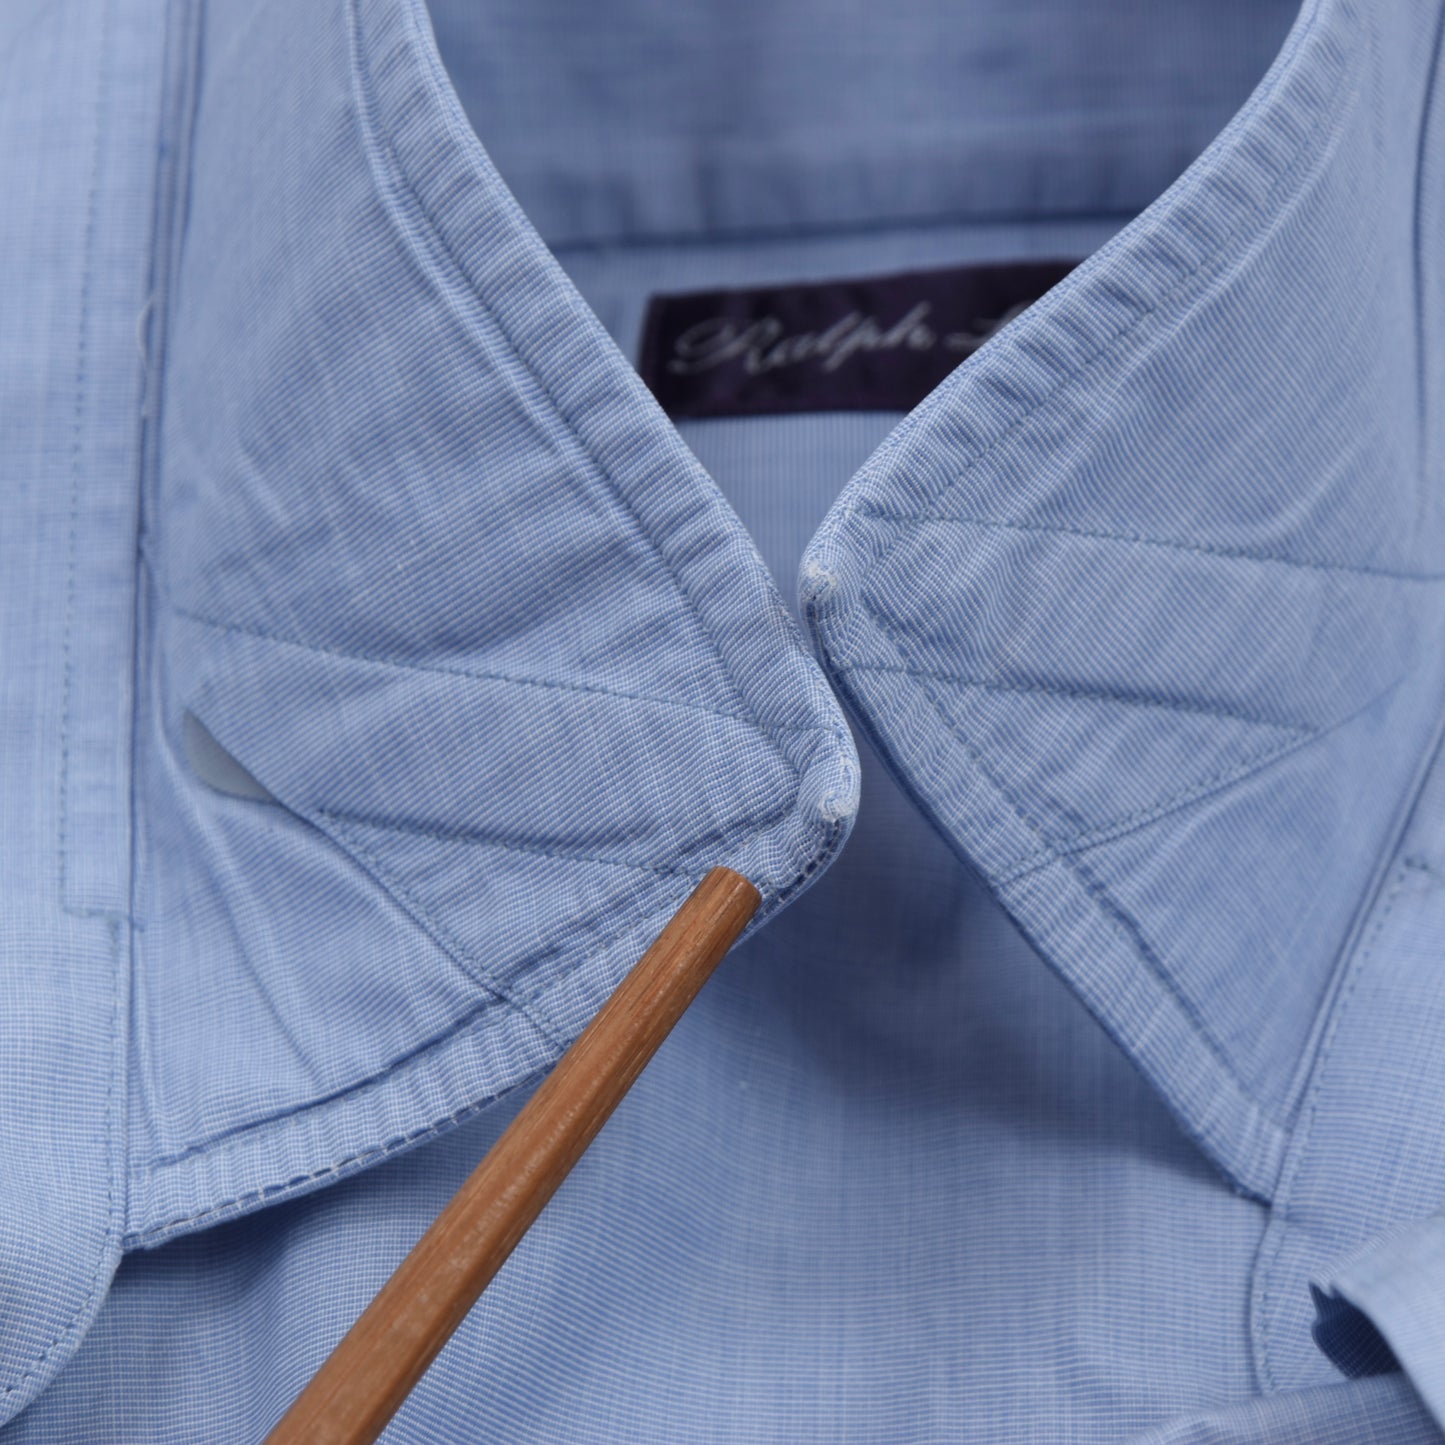 Ralph Lauren Purple Label French Cuff Shirt Shirt Size 16 1/2 - Blue